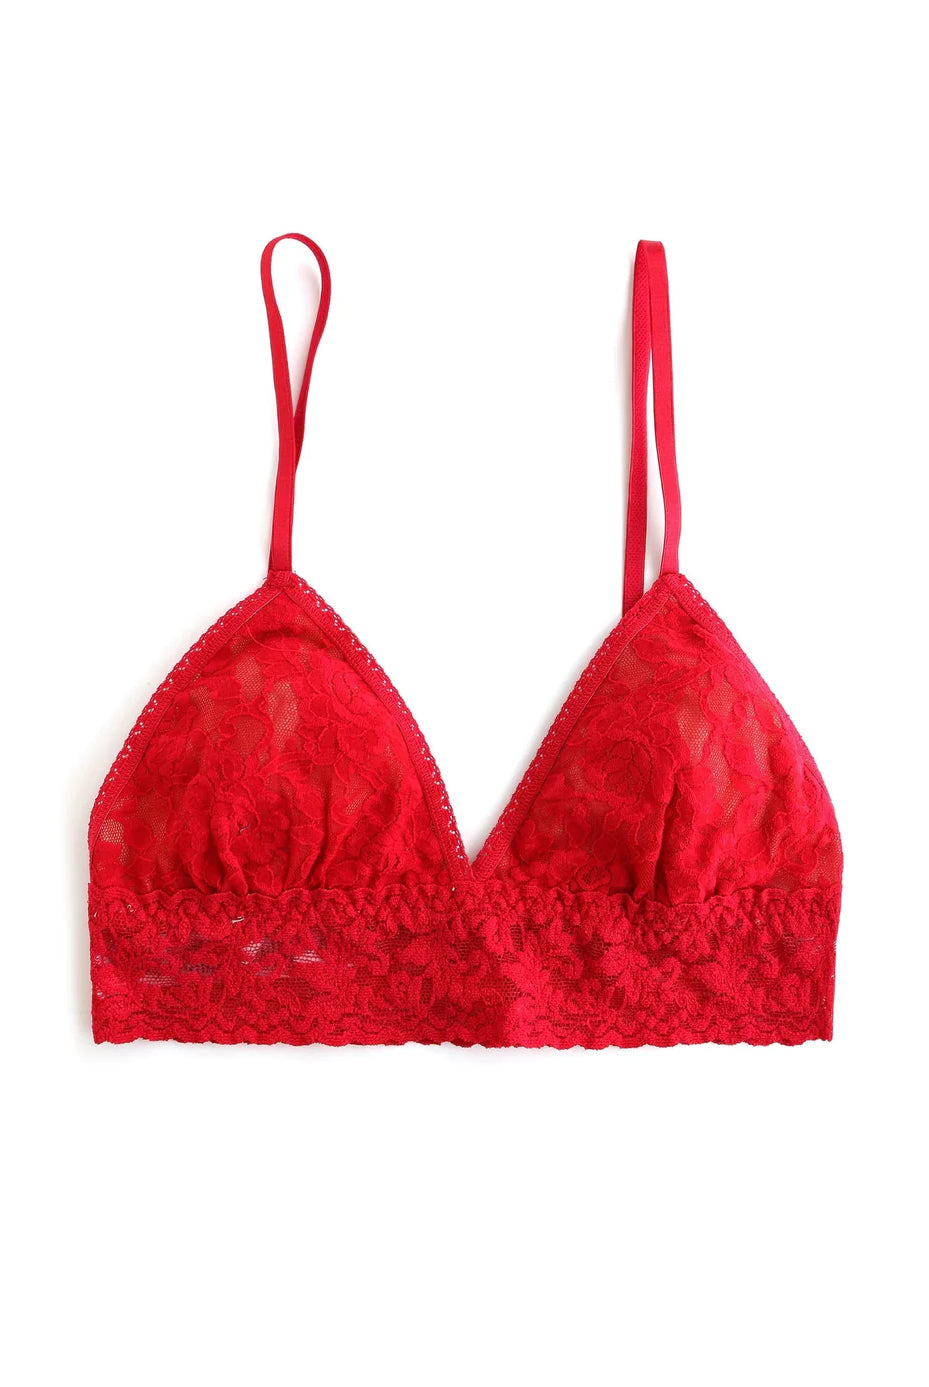 Signature Lace Padded Triangle Bralette - Red - Flirt! Luxe Lingerie & Sleepwear